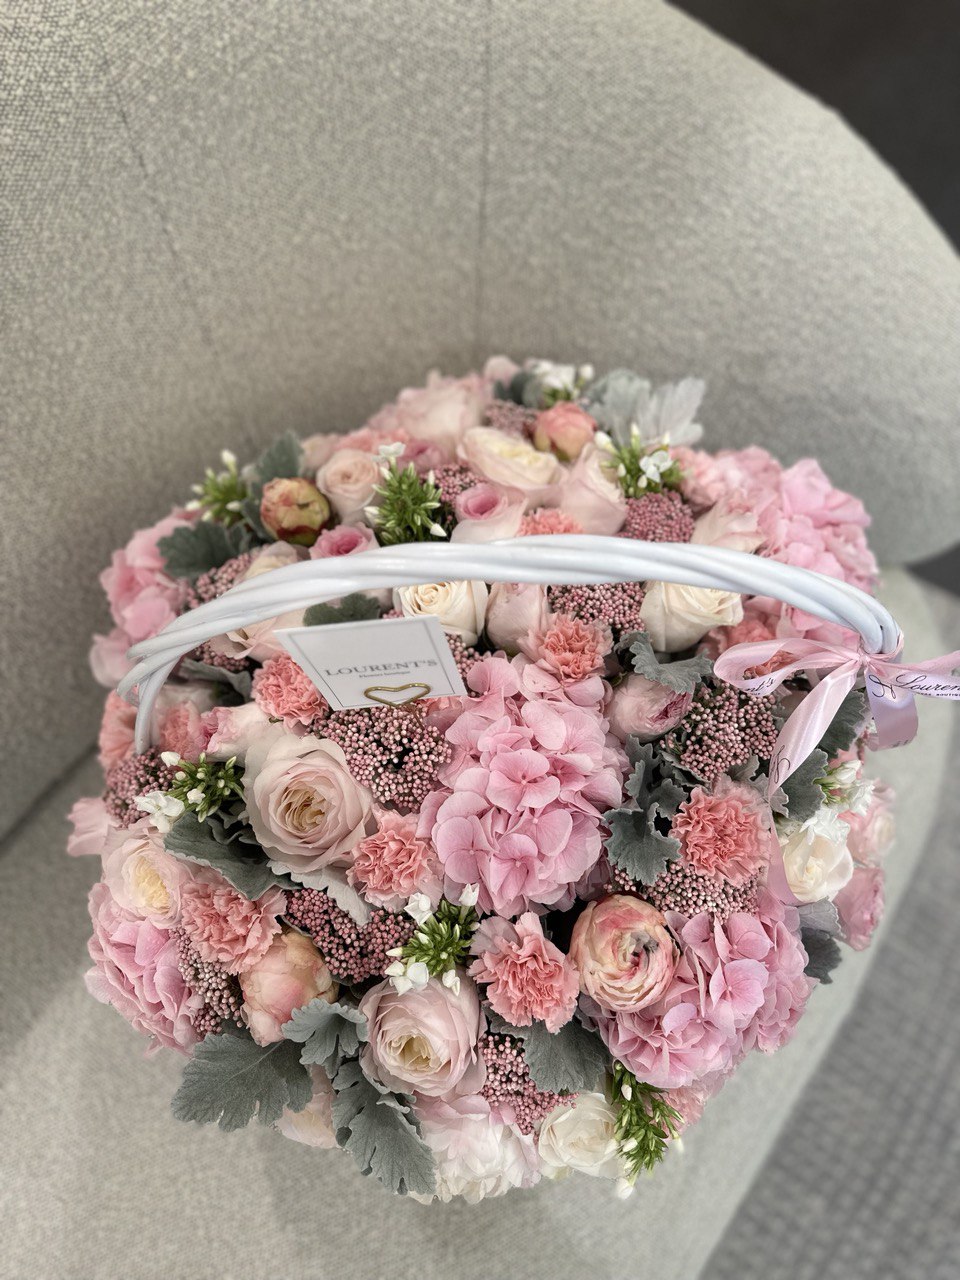 Flower basket "Pink dream"